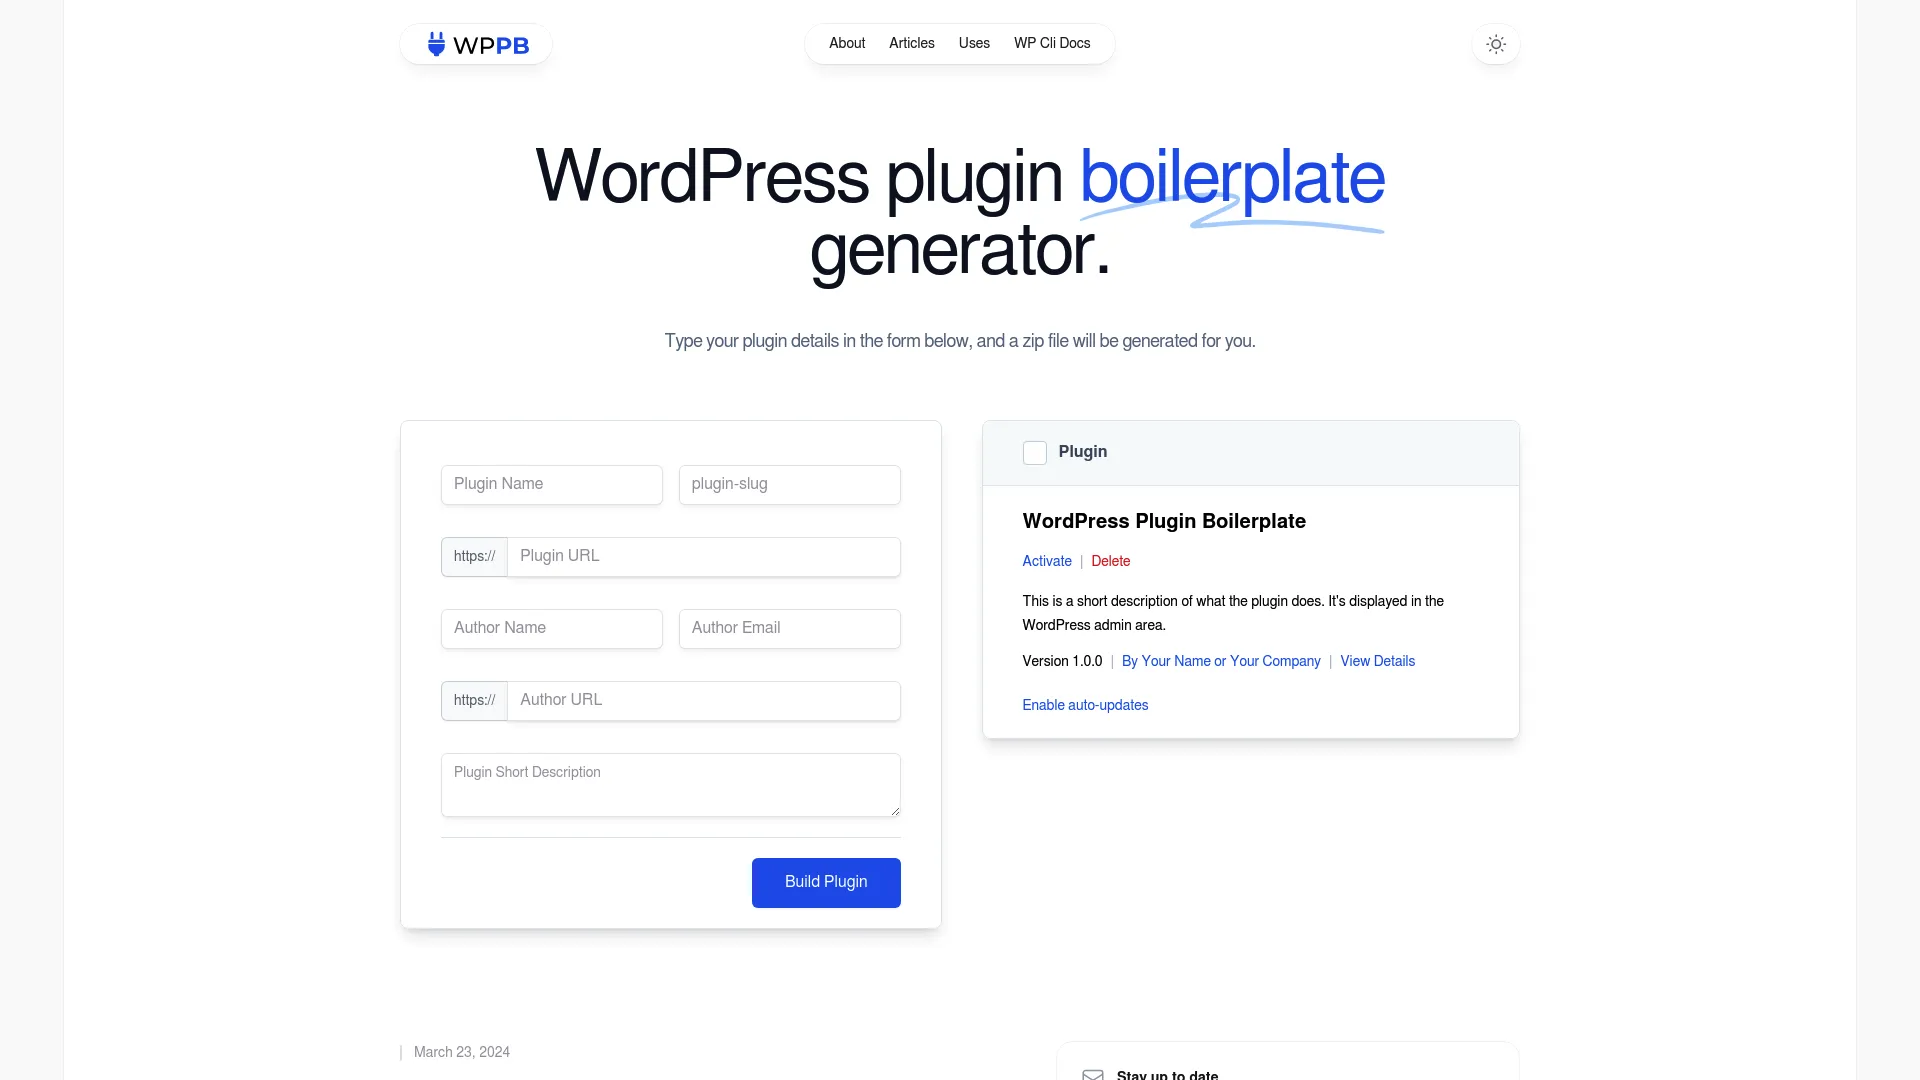 WordPress plugin boilerplate generator screenshot